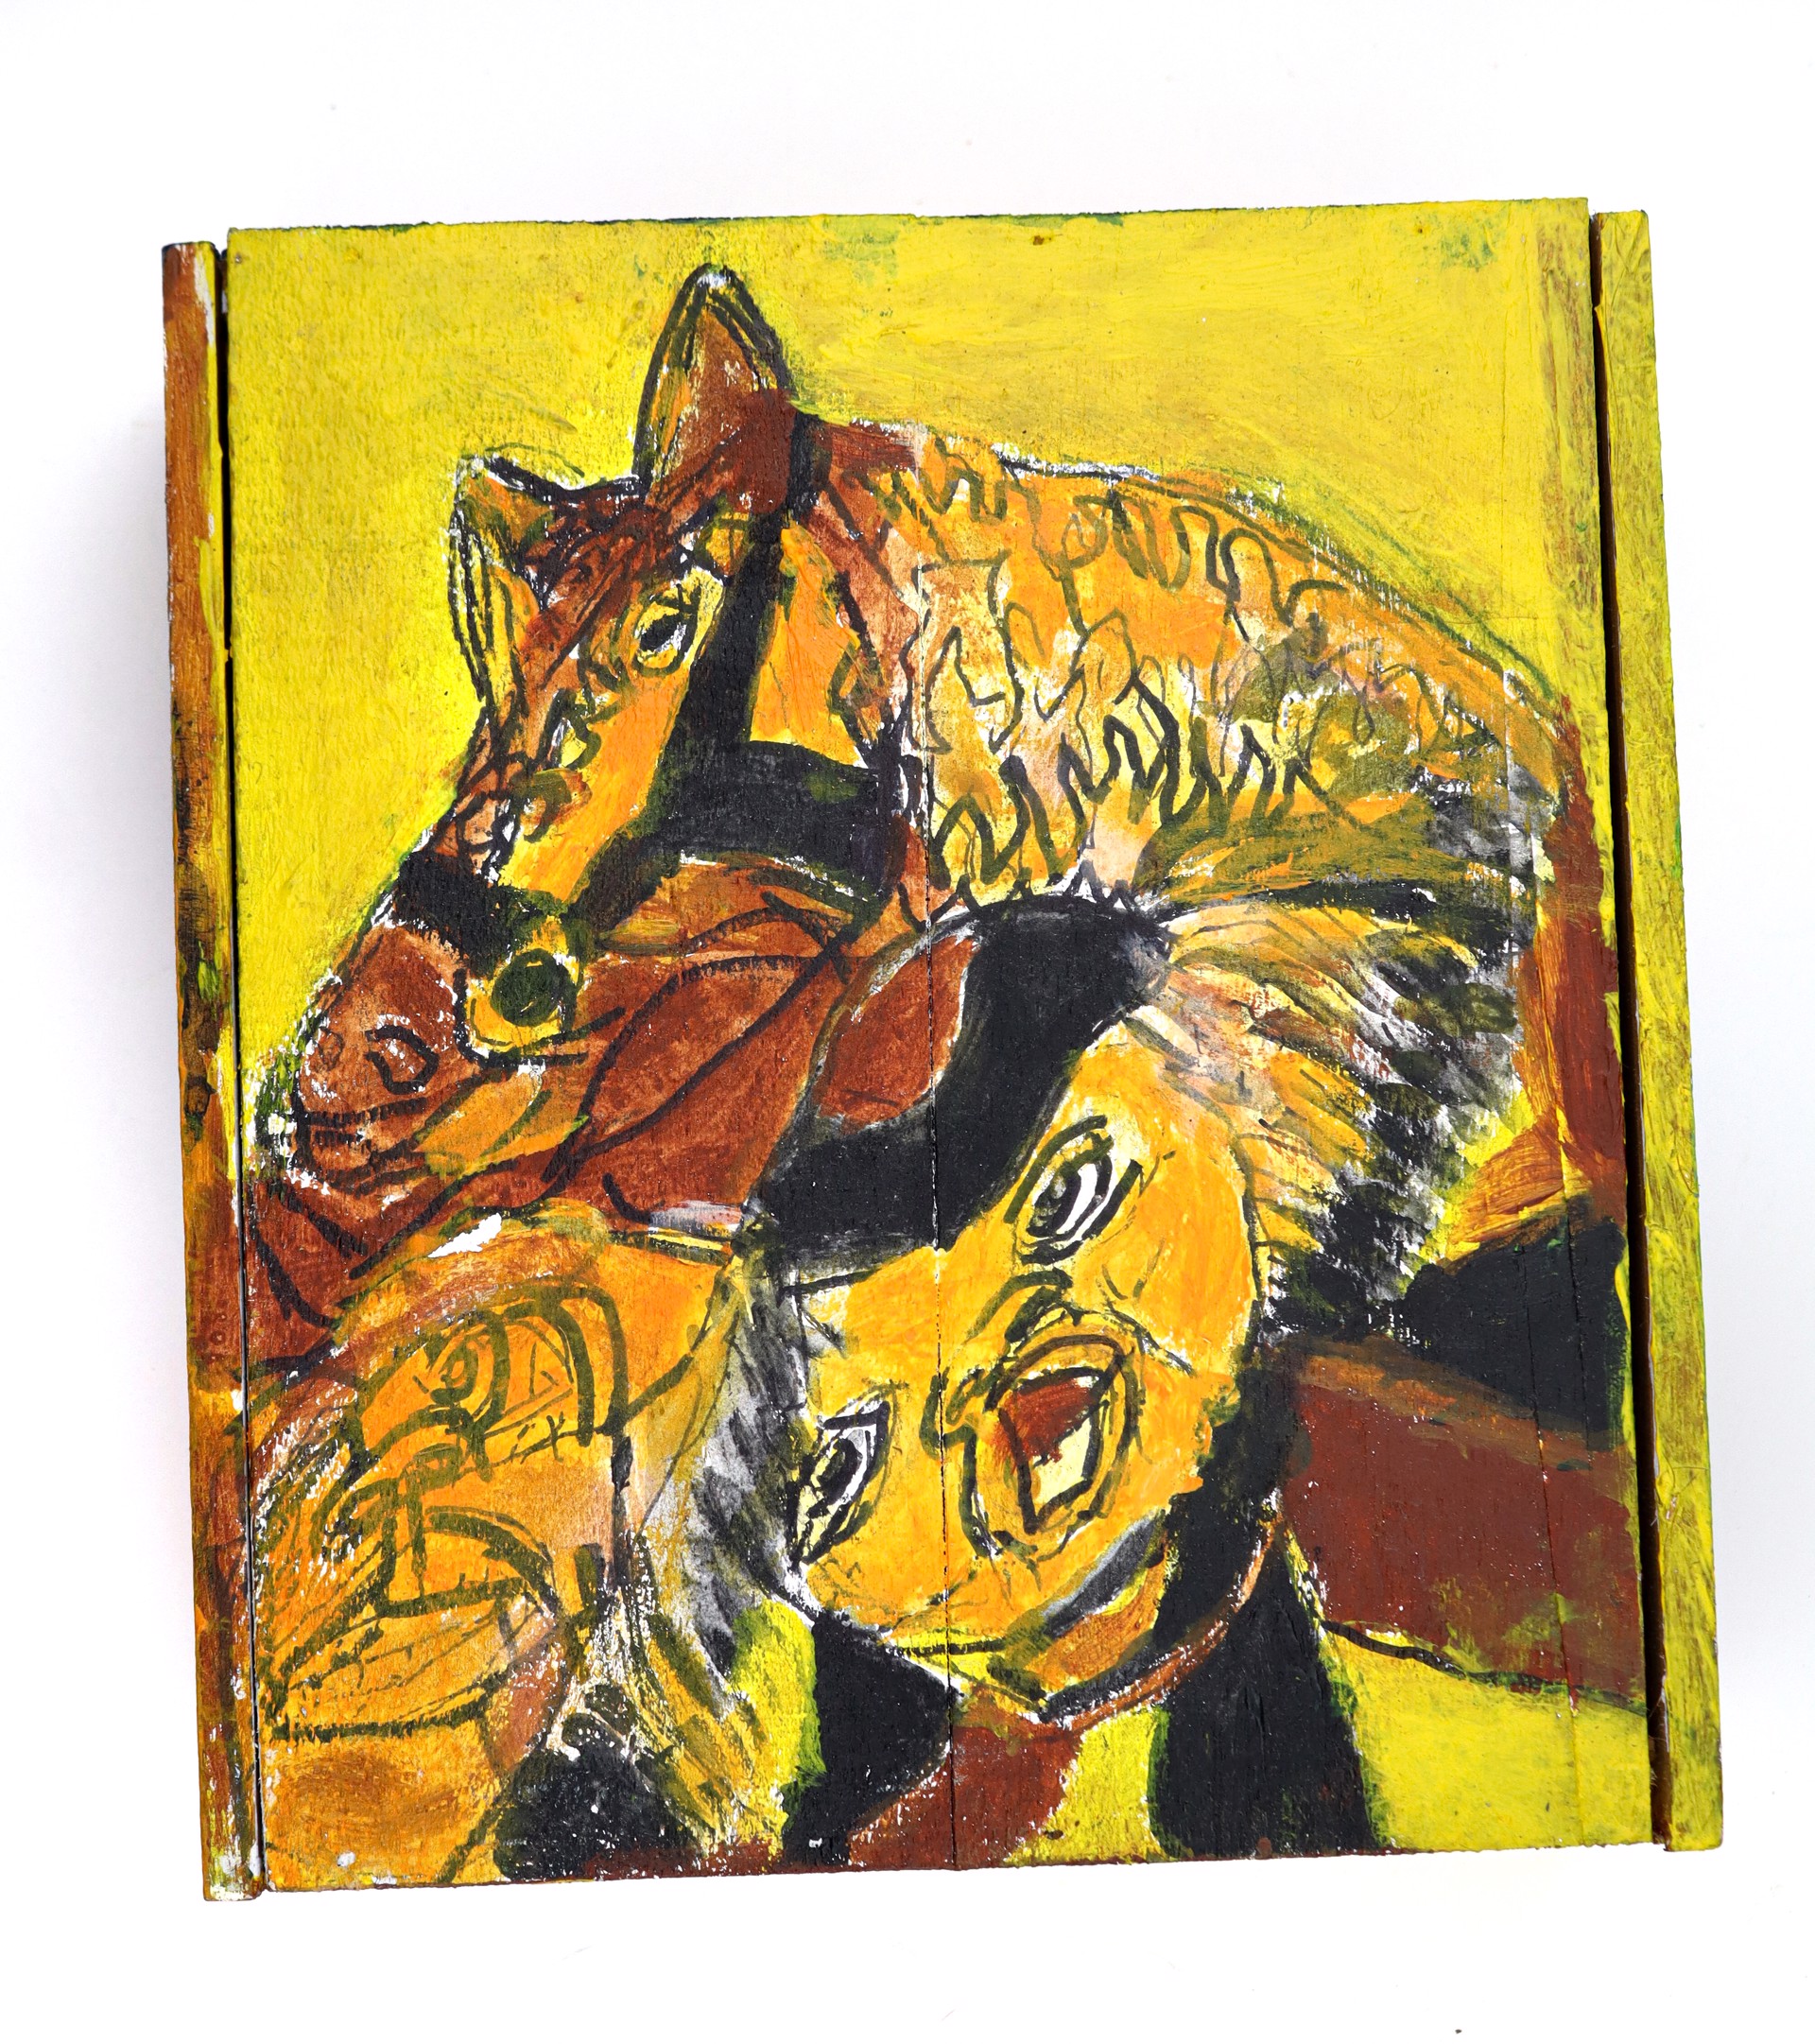 Portrait Box with Horse by Egbert "Clem" Evans